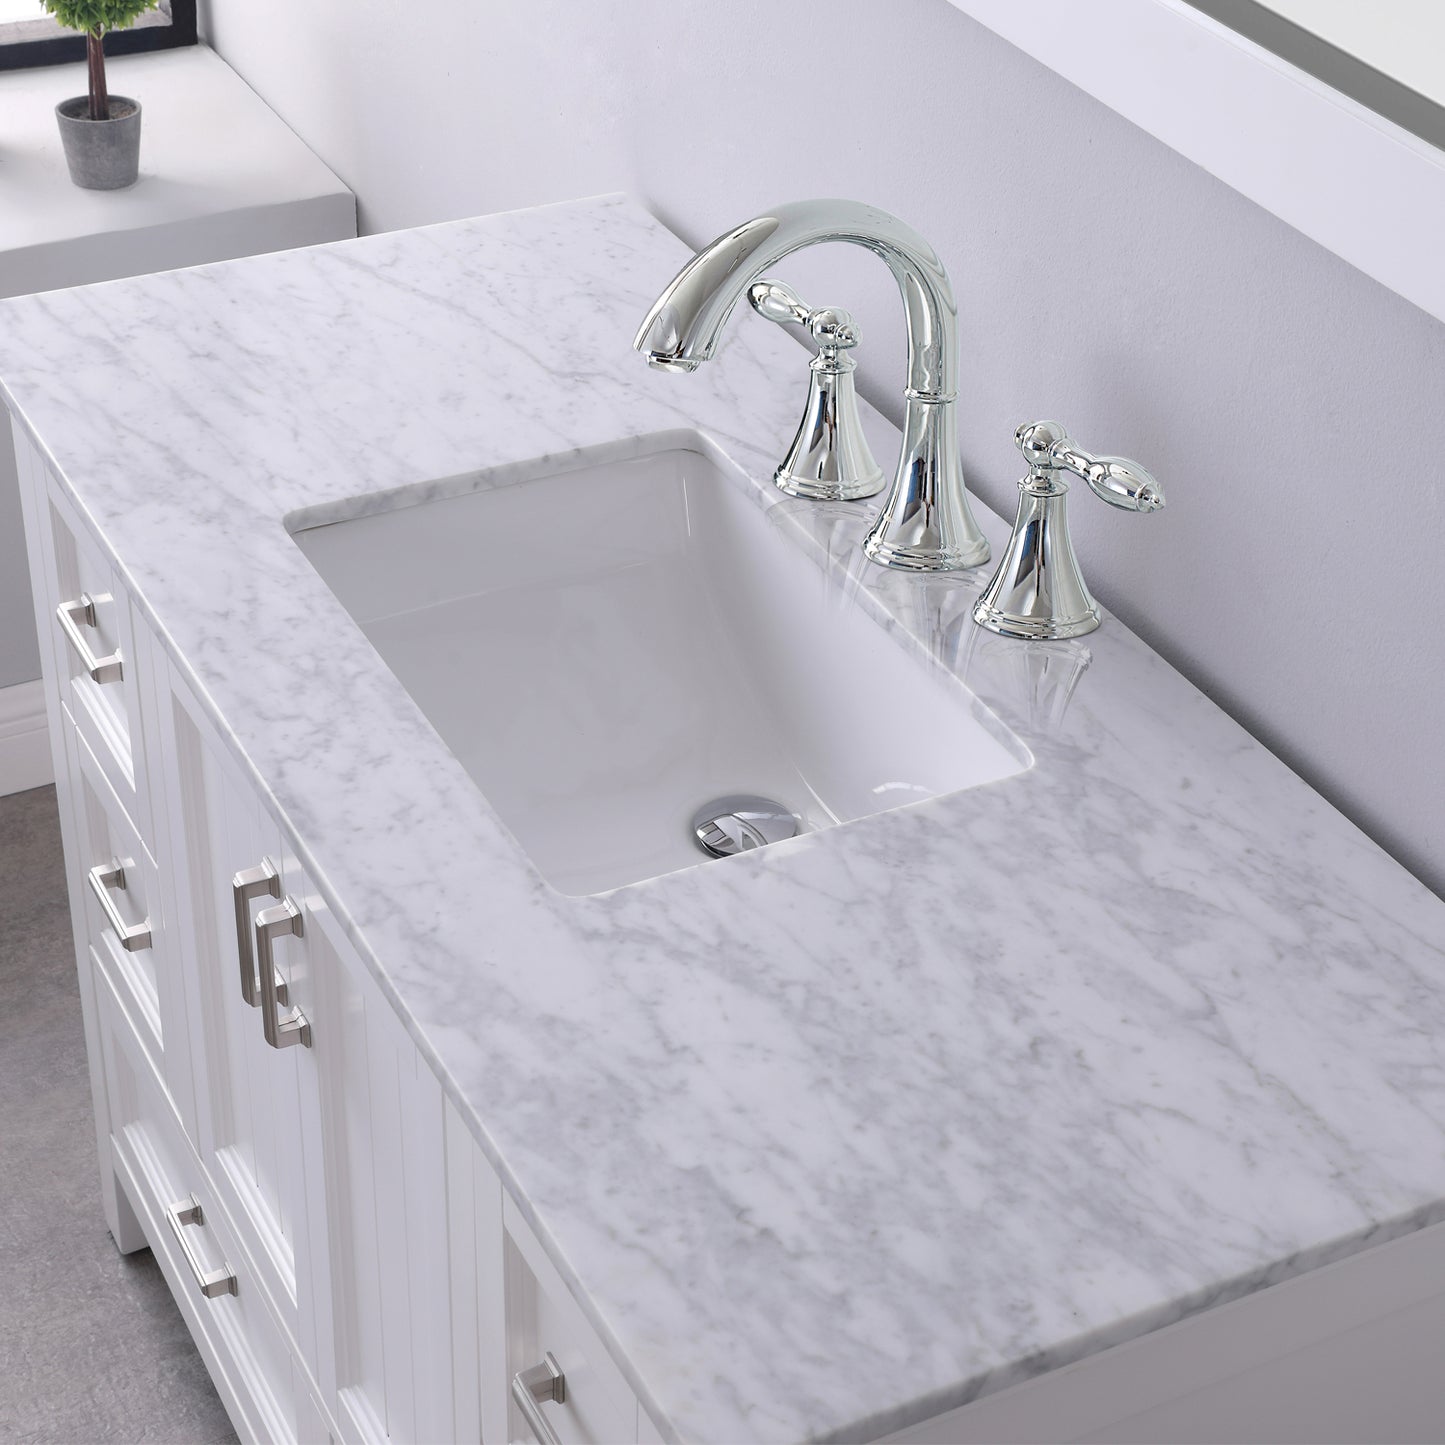 Isla 48" Single Bathroom Vanity Set with Carrara White Marble Countertop -Altair